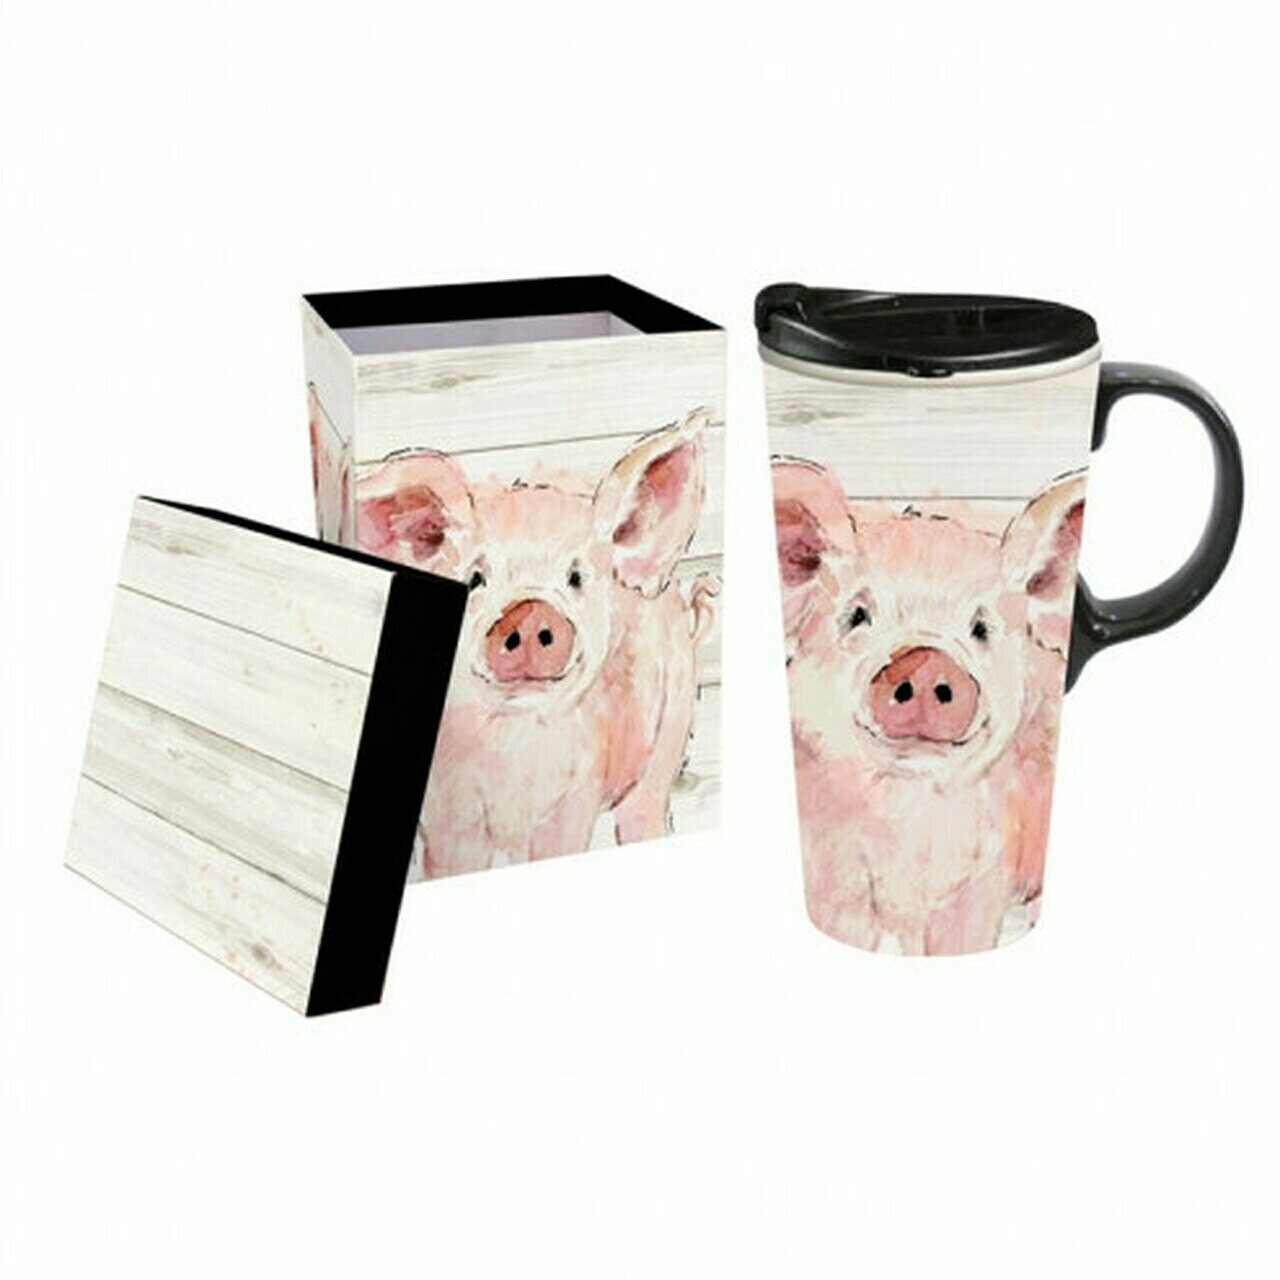 Ceramic Travel Mug with Gift Box, 17 ounces (Pretty Pink Pig)